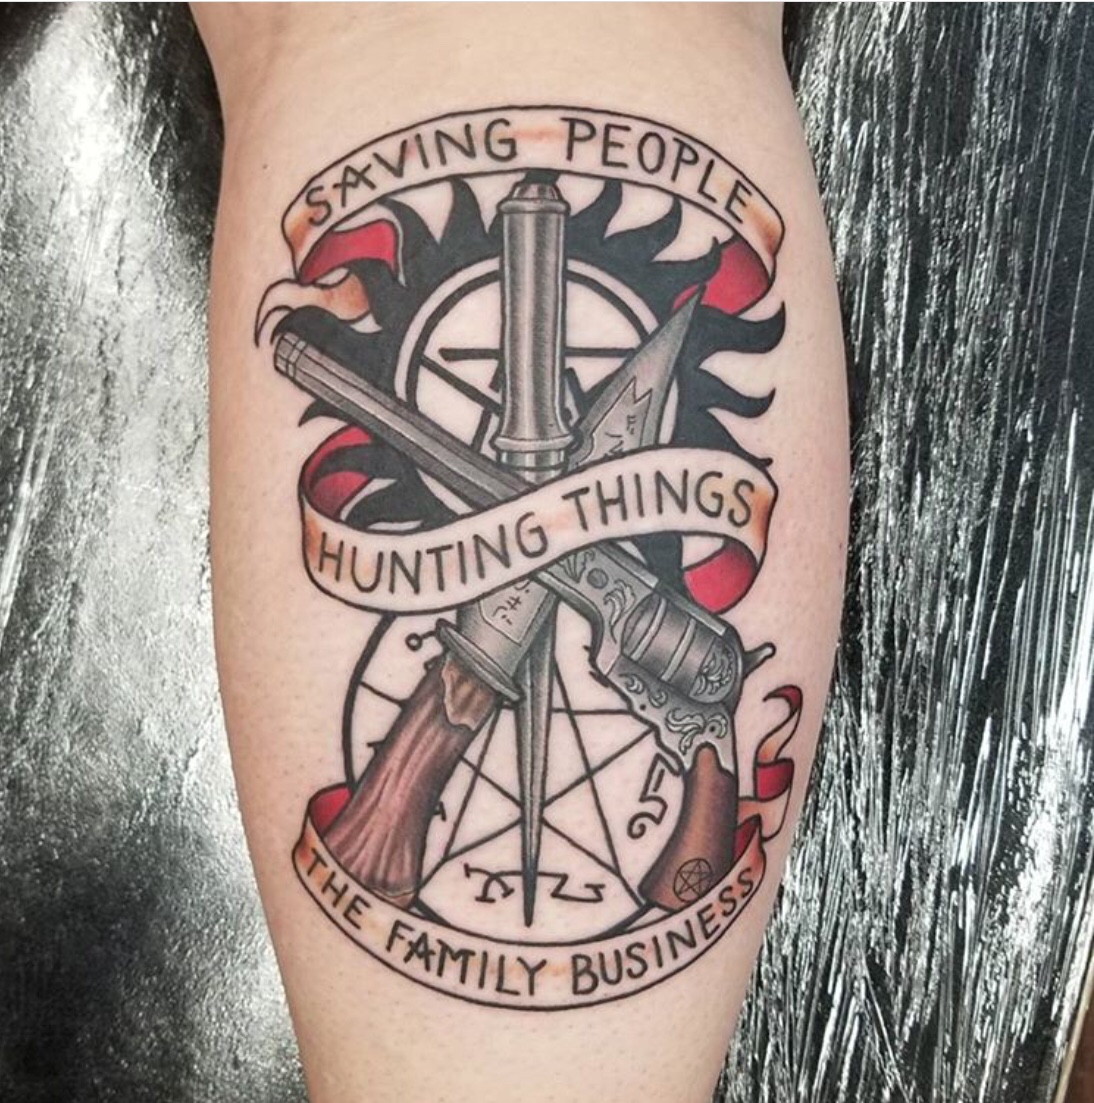 saving people hunting things tattoo